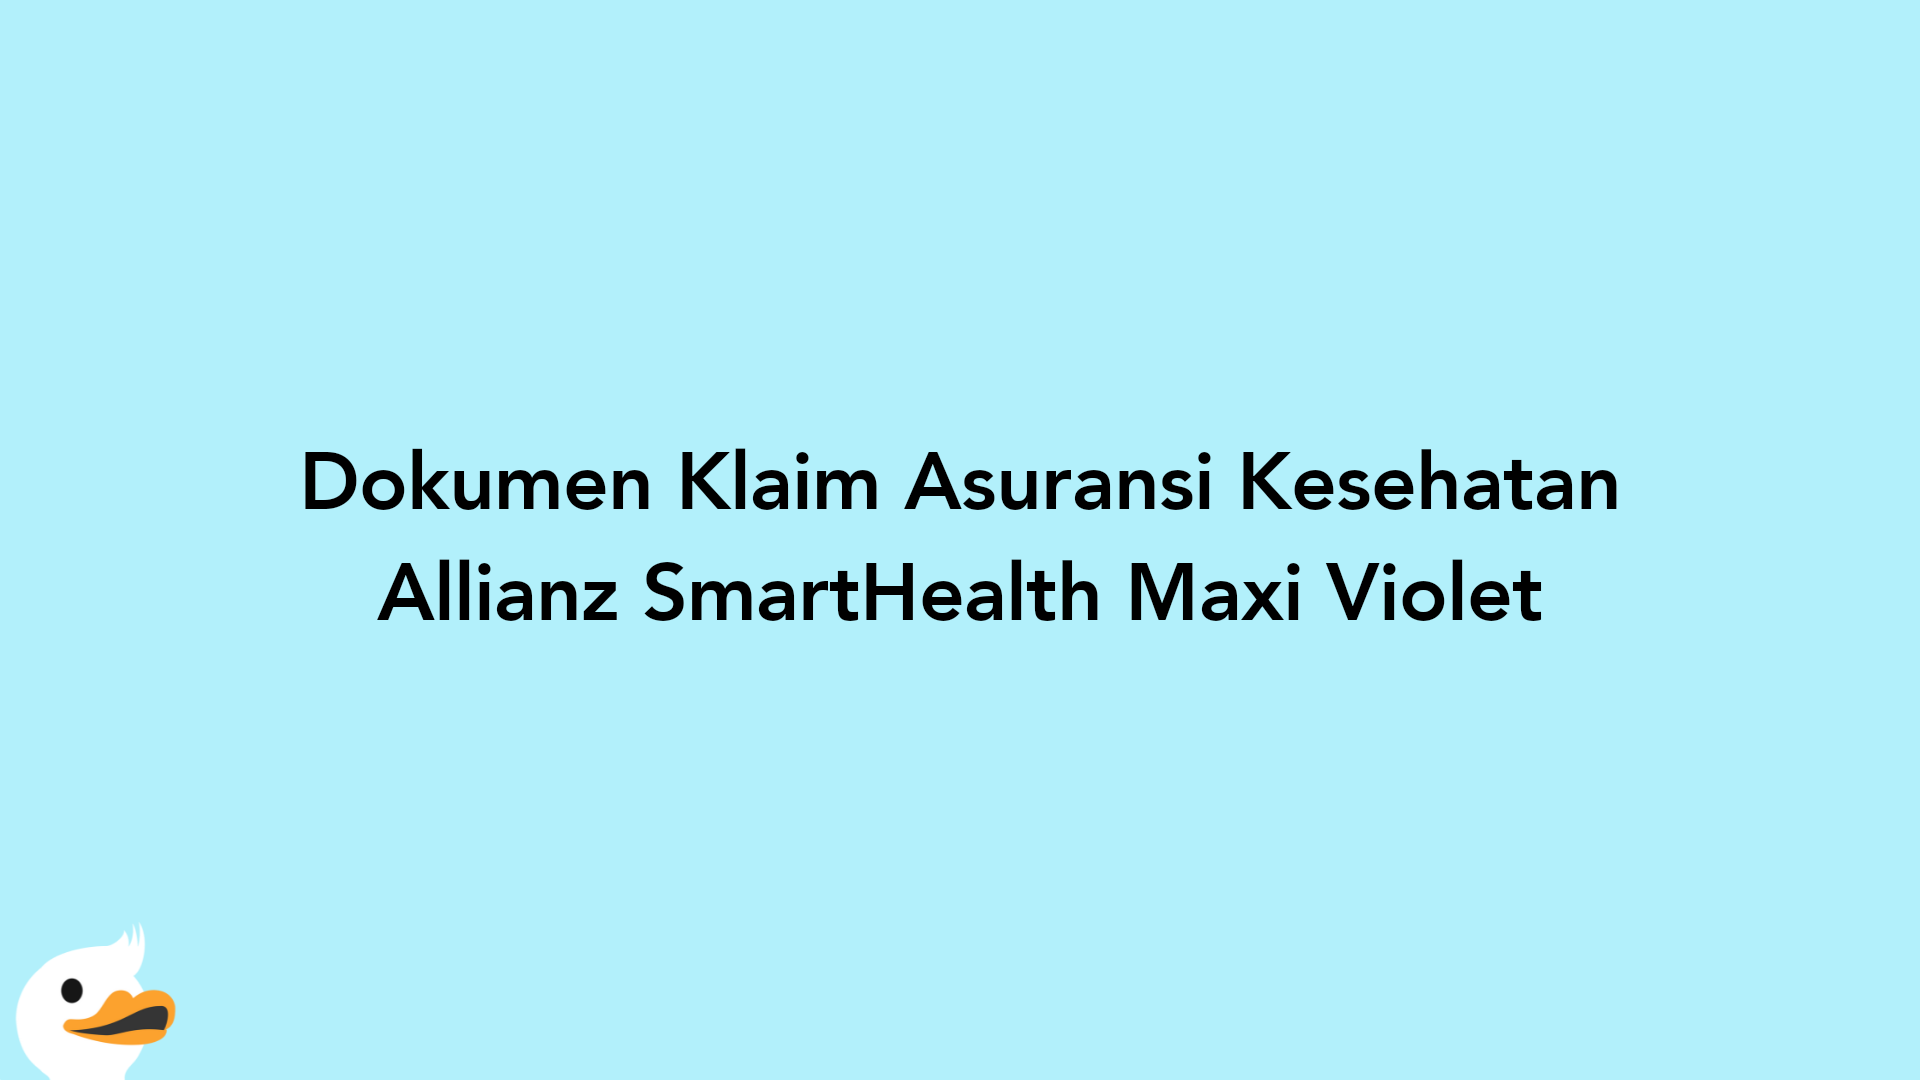 Dokumen Klaim Asuransi Kesehatan Allianz SmartHealth Maxi Violet